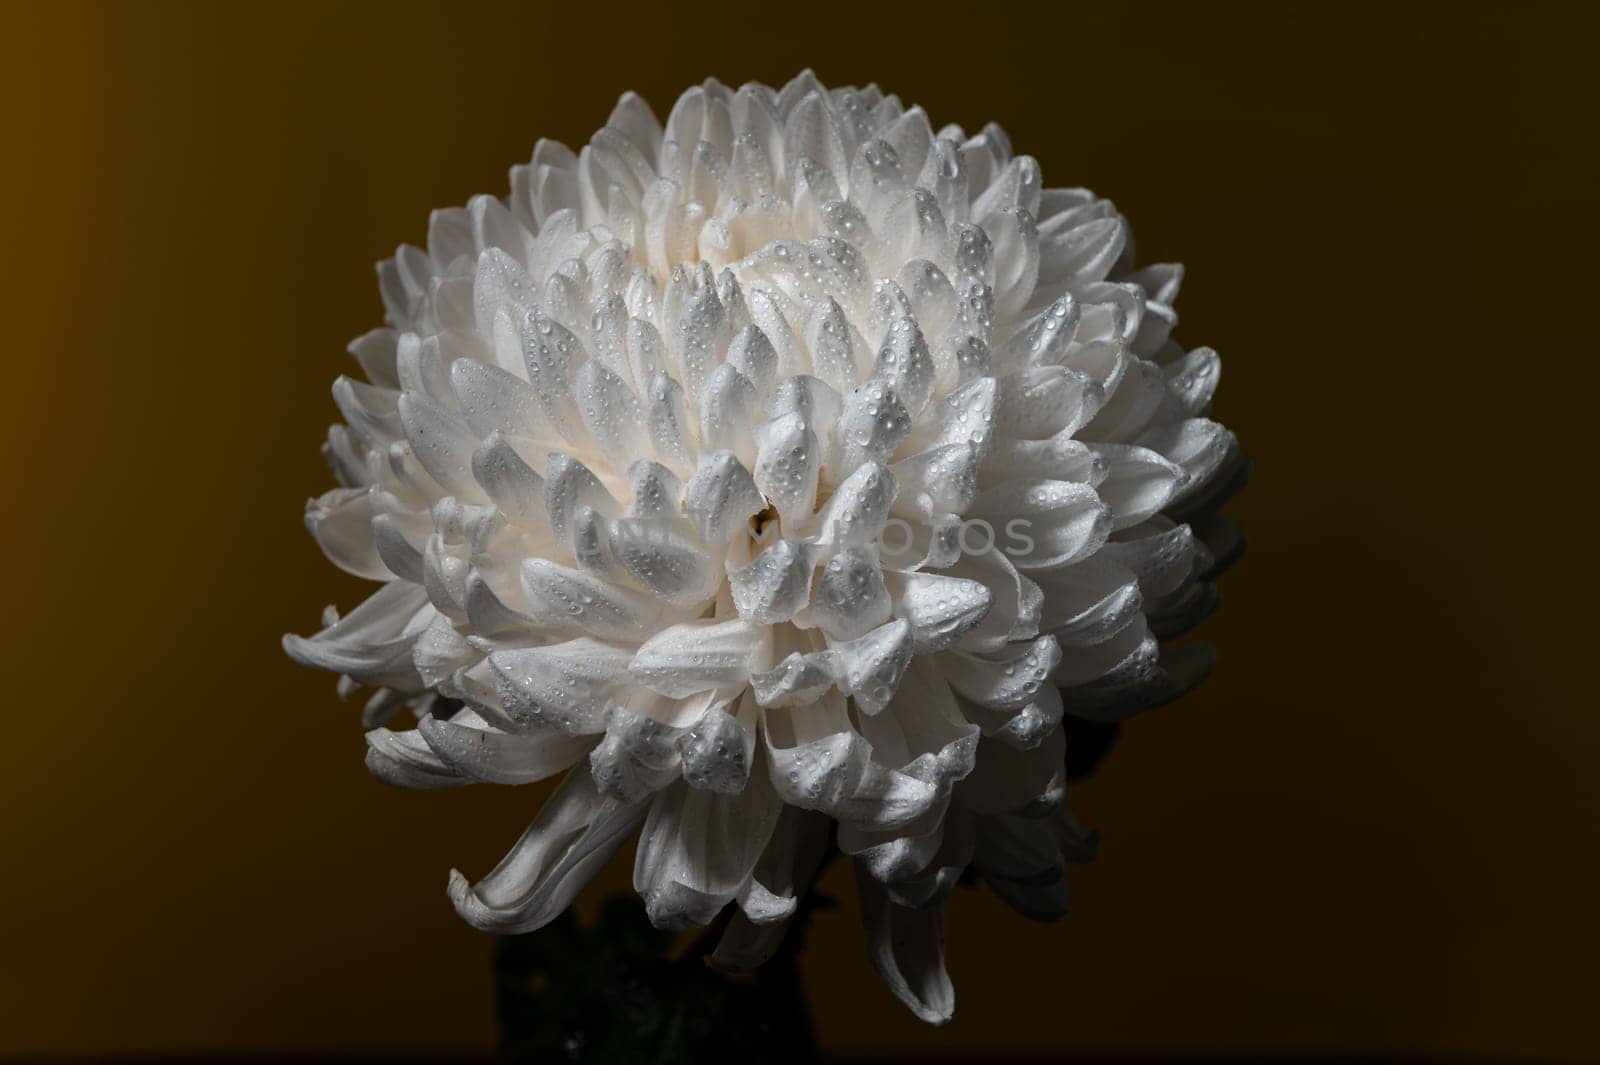 White chrysanthemum on a dark background by Multipedia